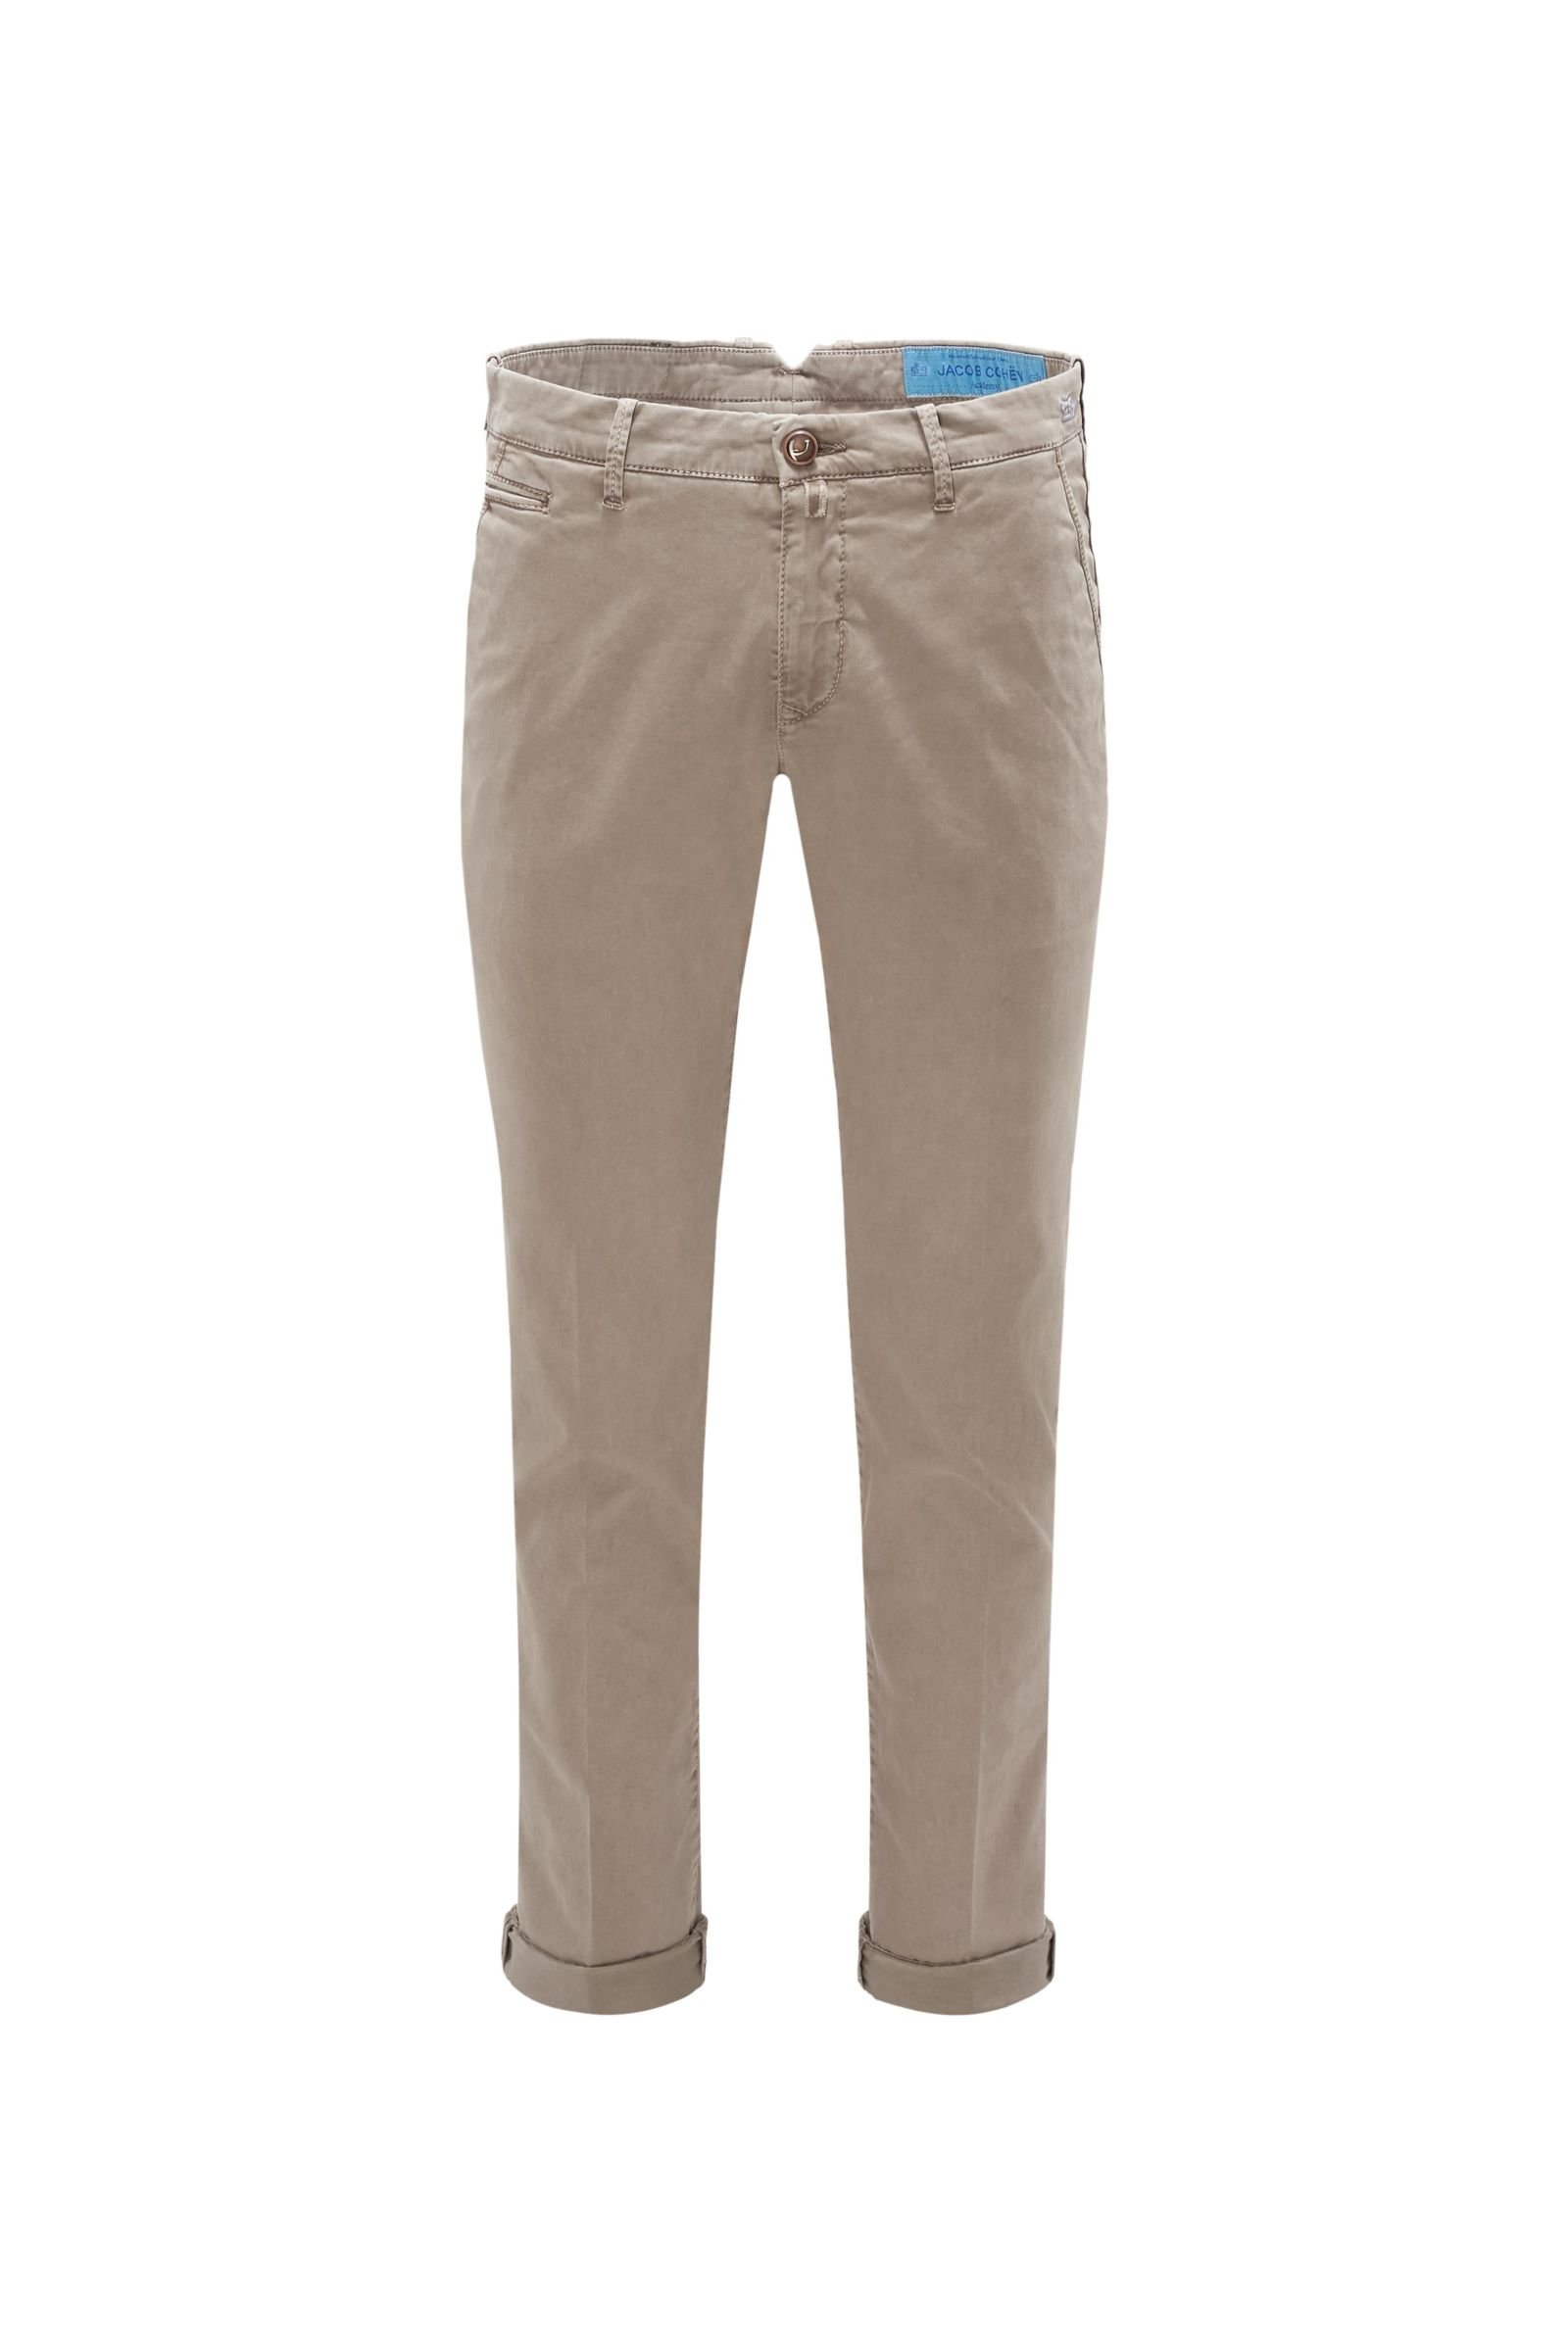 Cotton trousers 'B Comfort Slim Fit' grey-brown